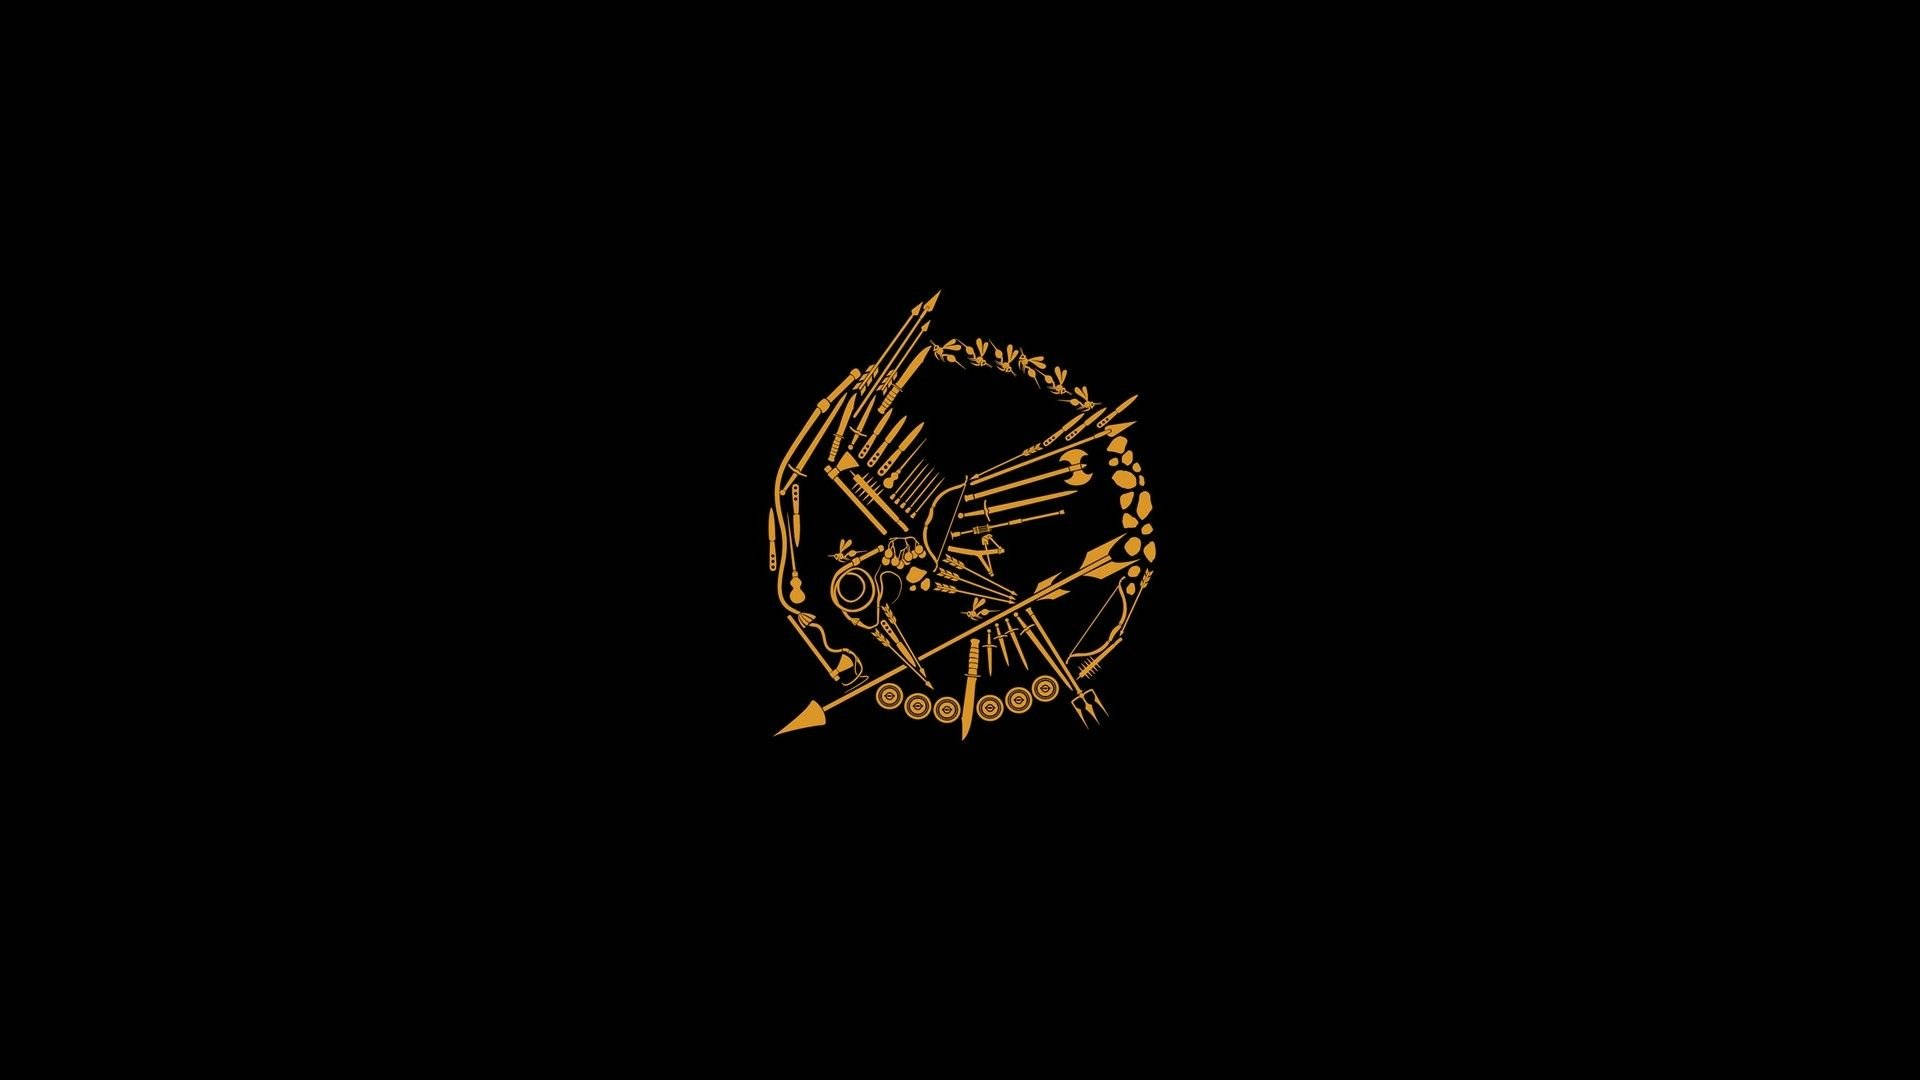 The Hunger Games Mockingjay Logo Art Wallpaper